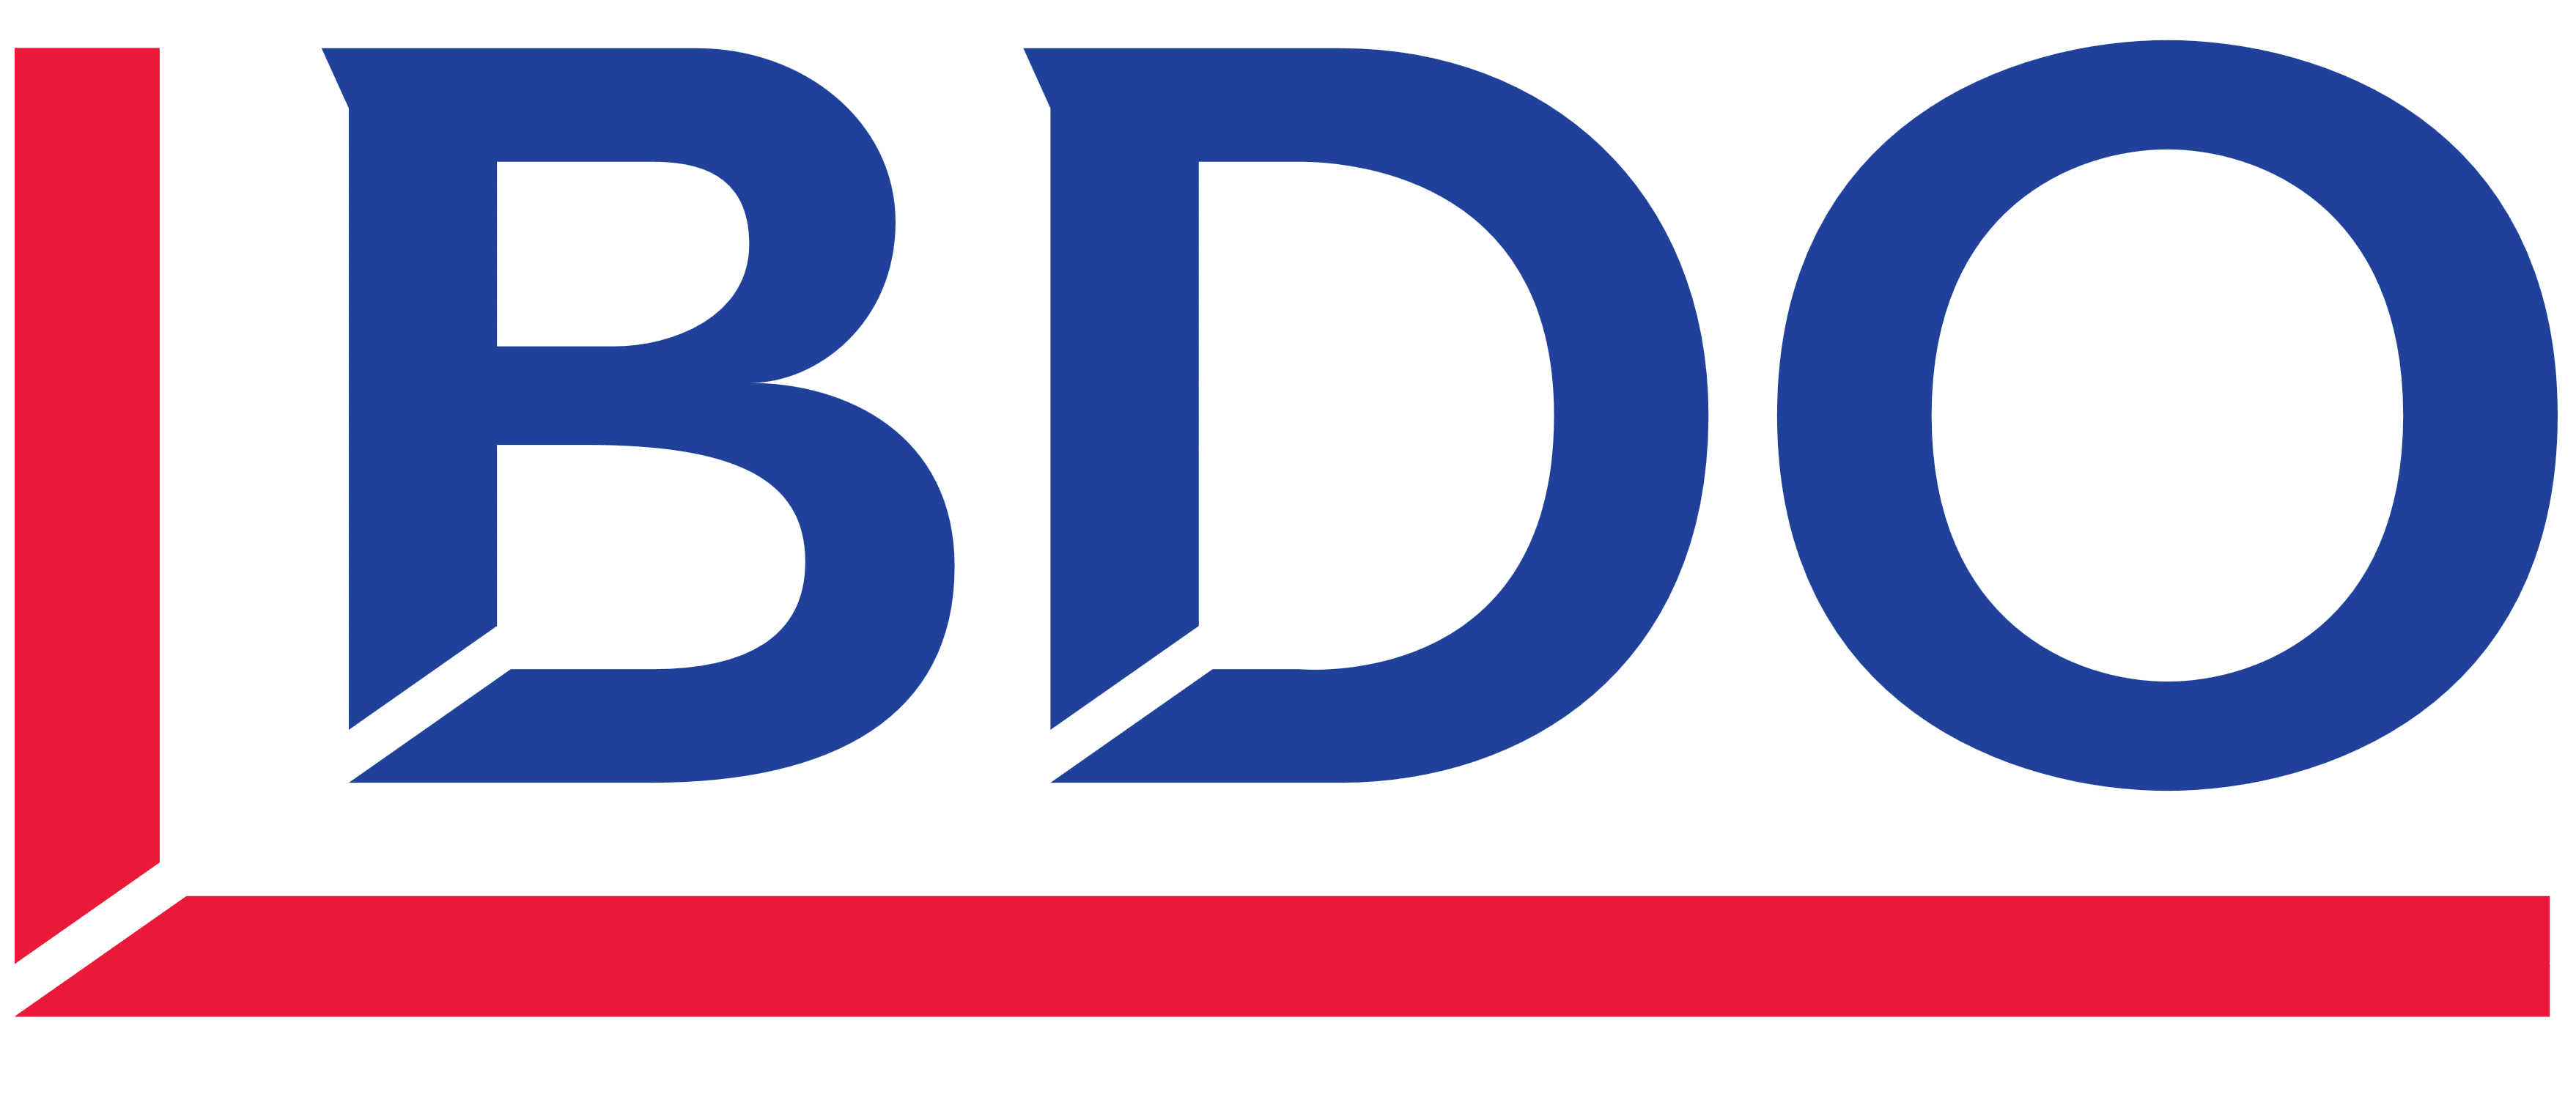 BDO logo, logotype